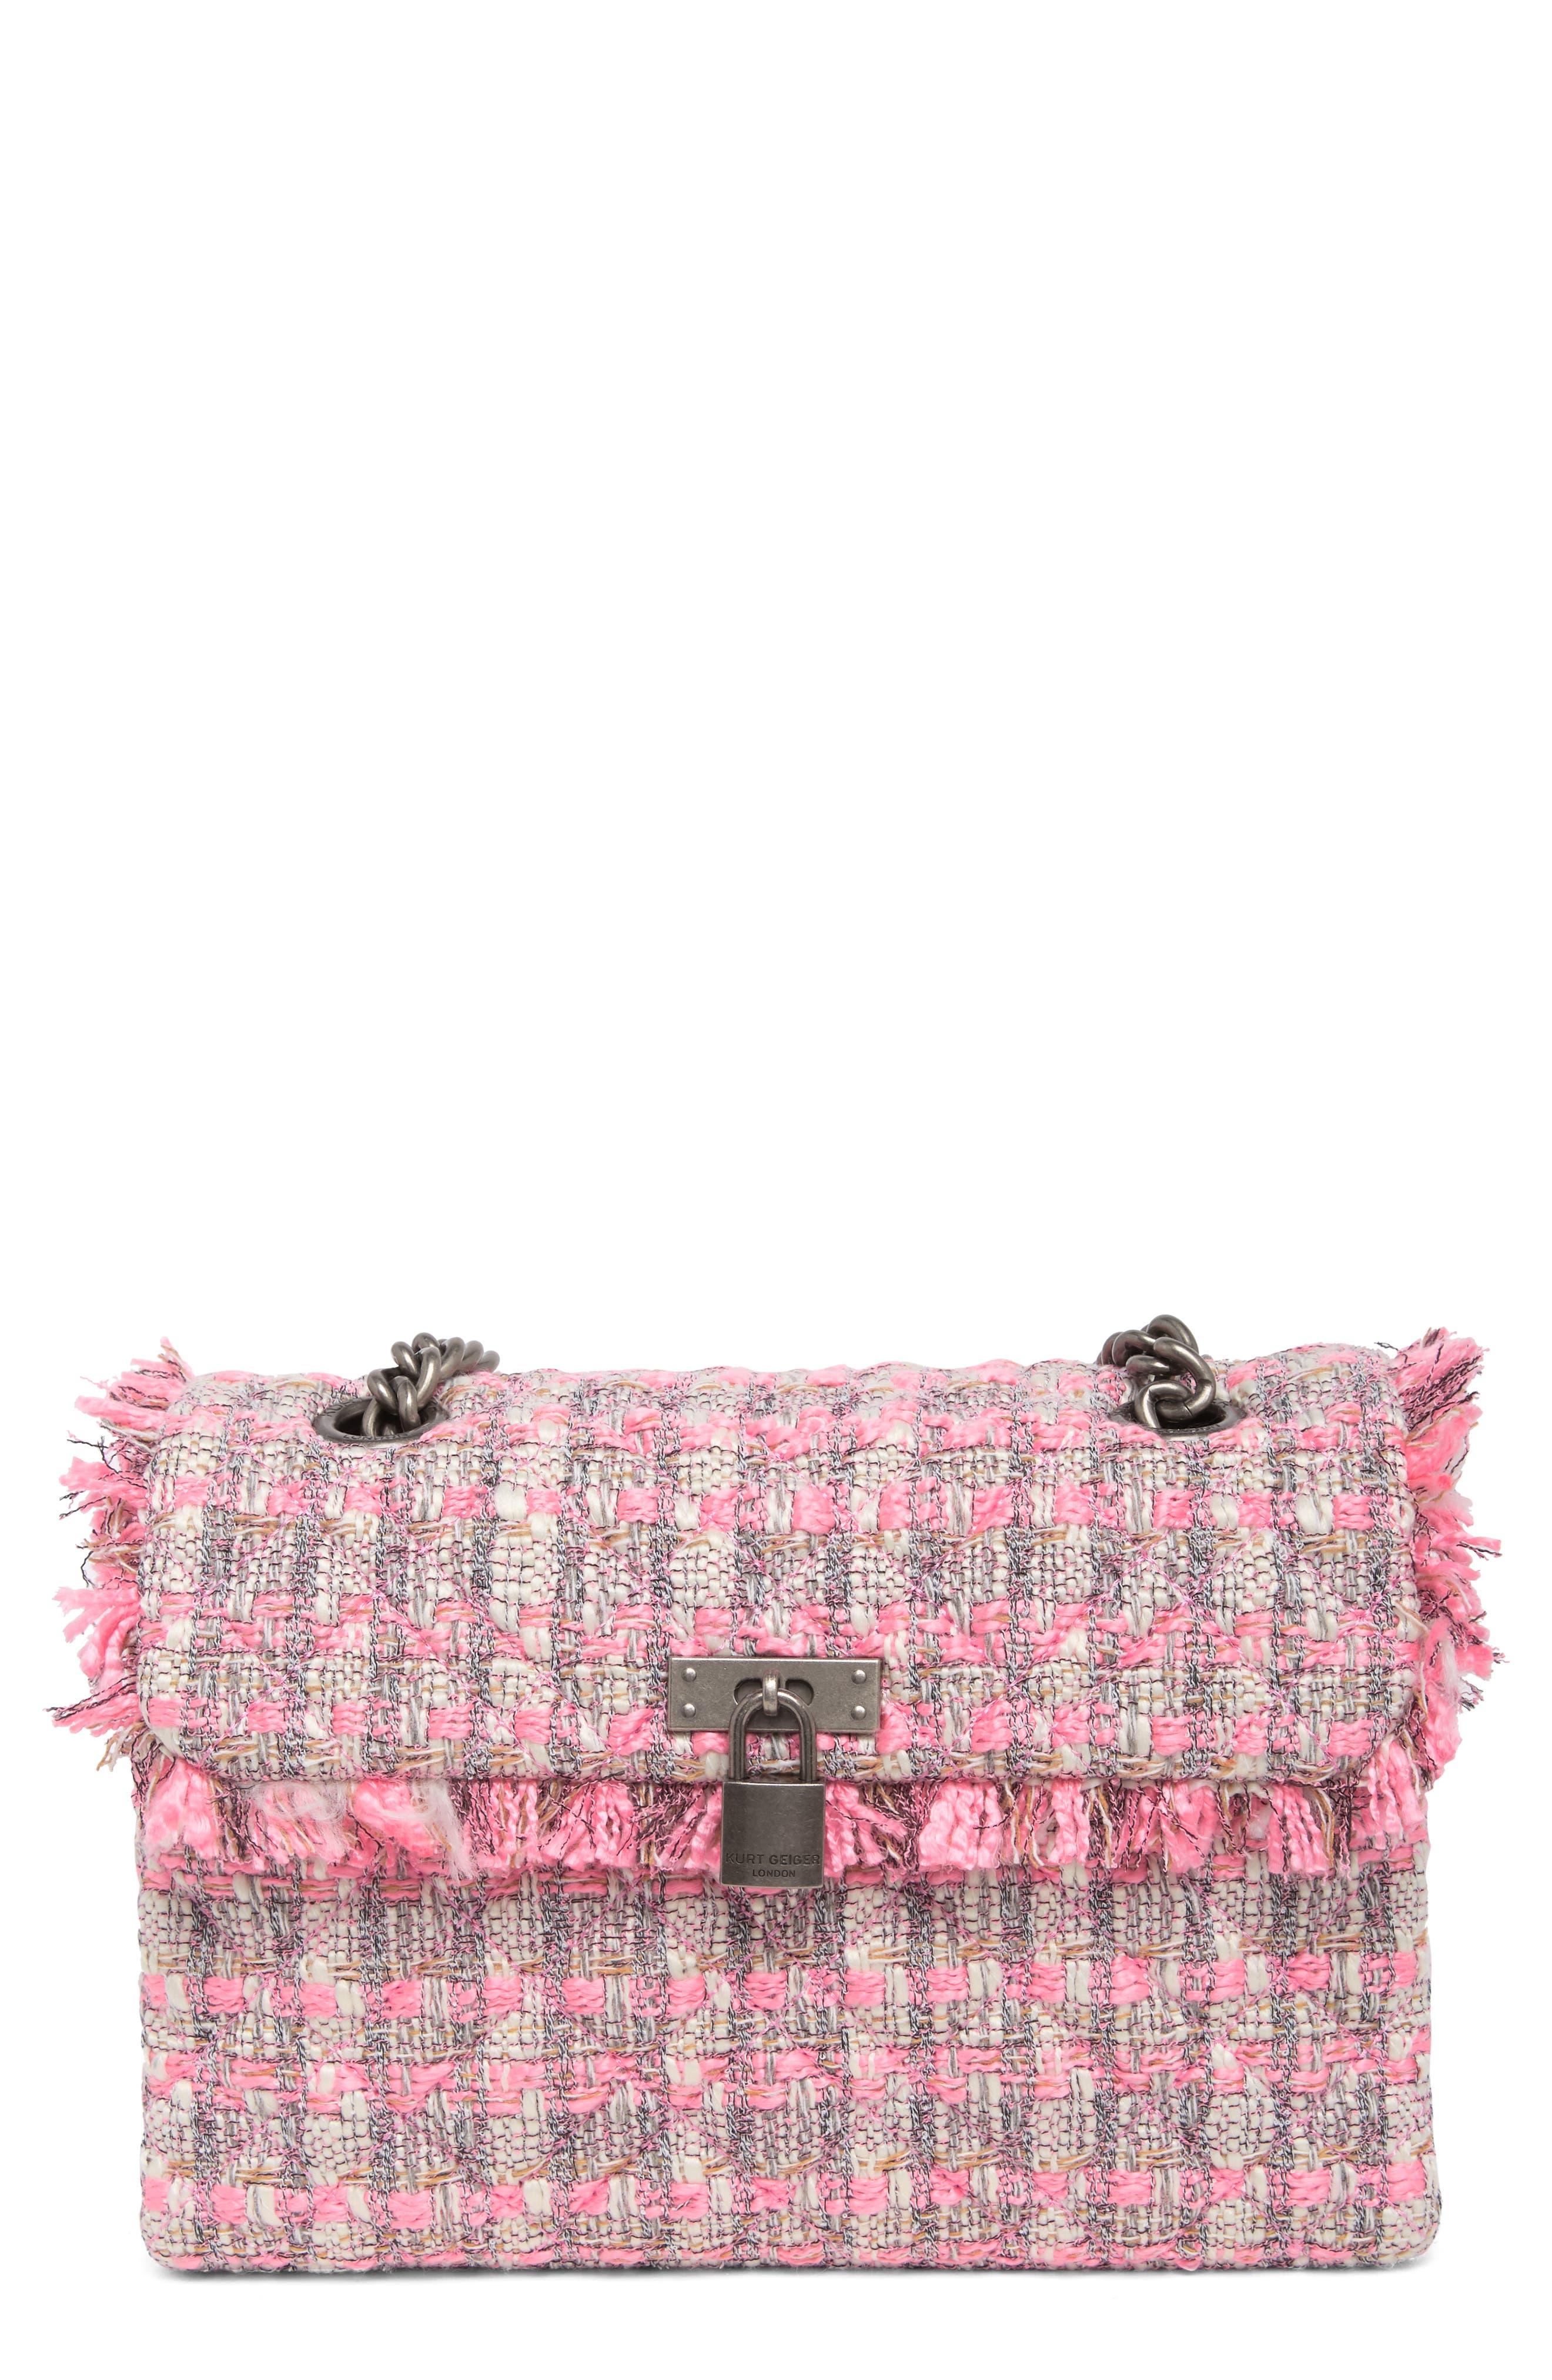 Kurt Geiger Tweed Brixton Lock Shoulder Bag in Pink | Lyst